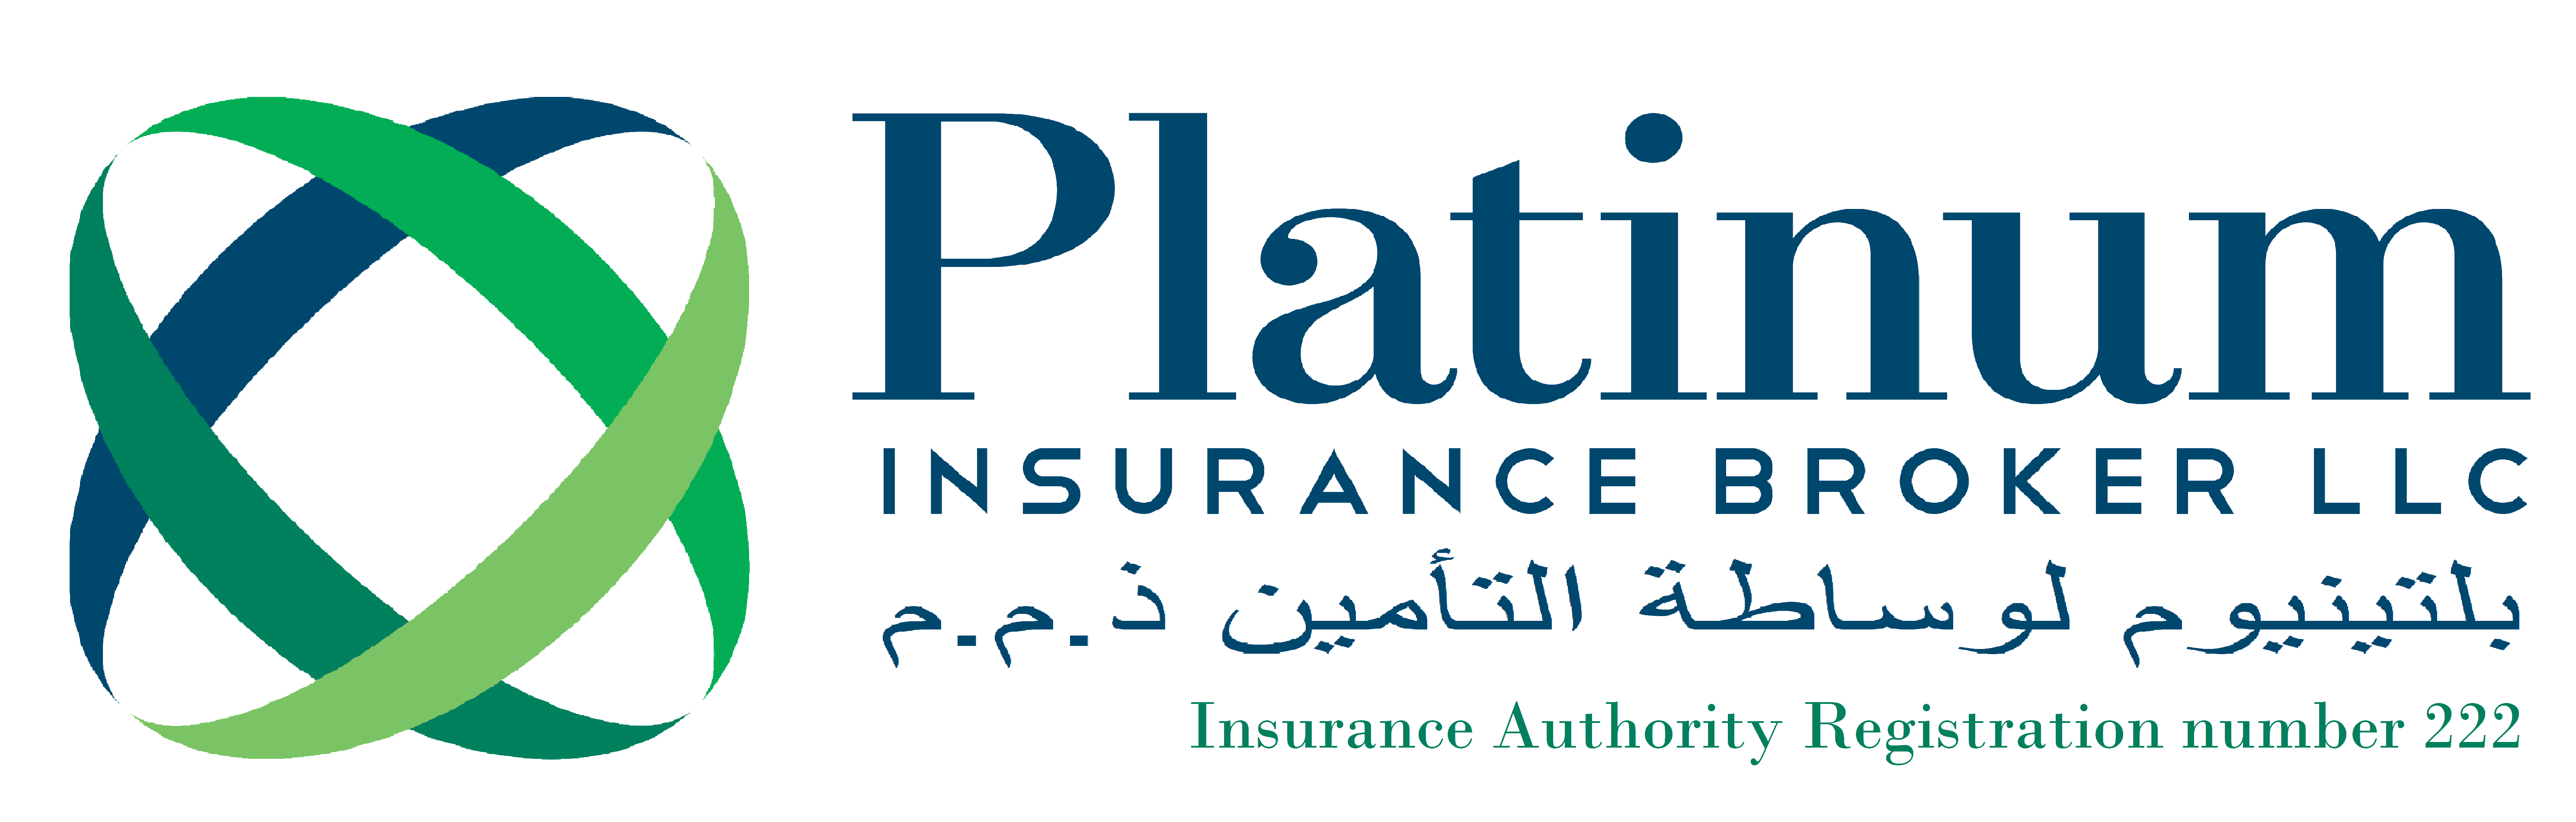 Platinum Insurance Broker L.L.C